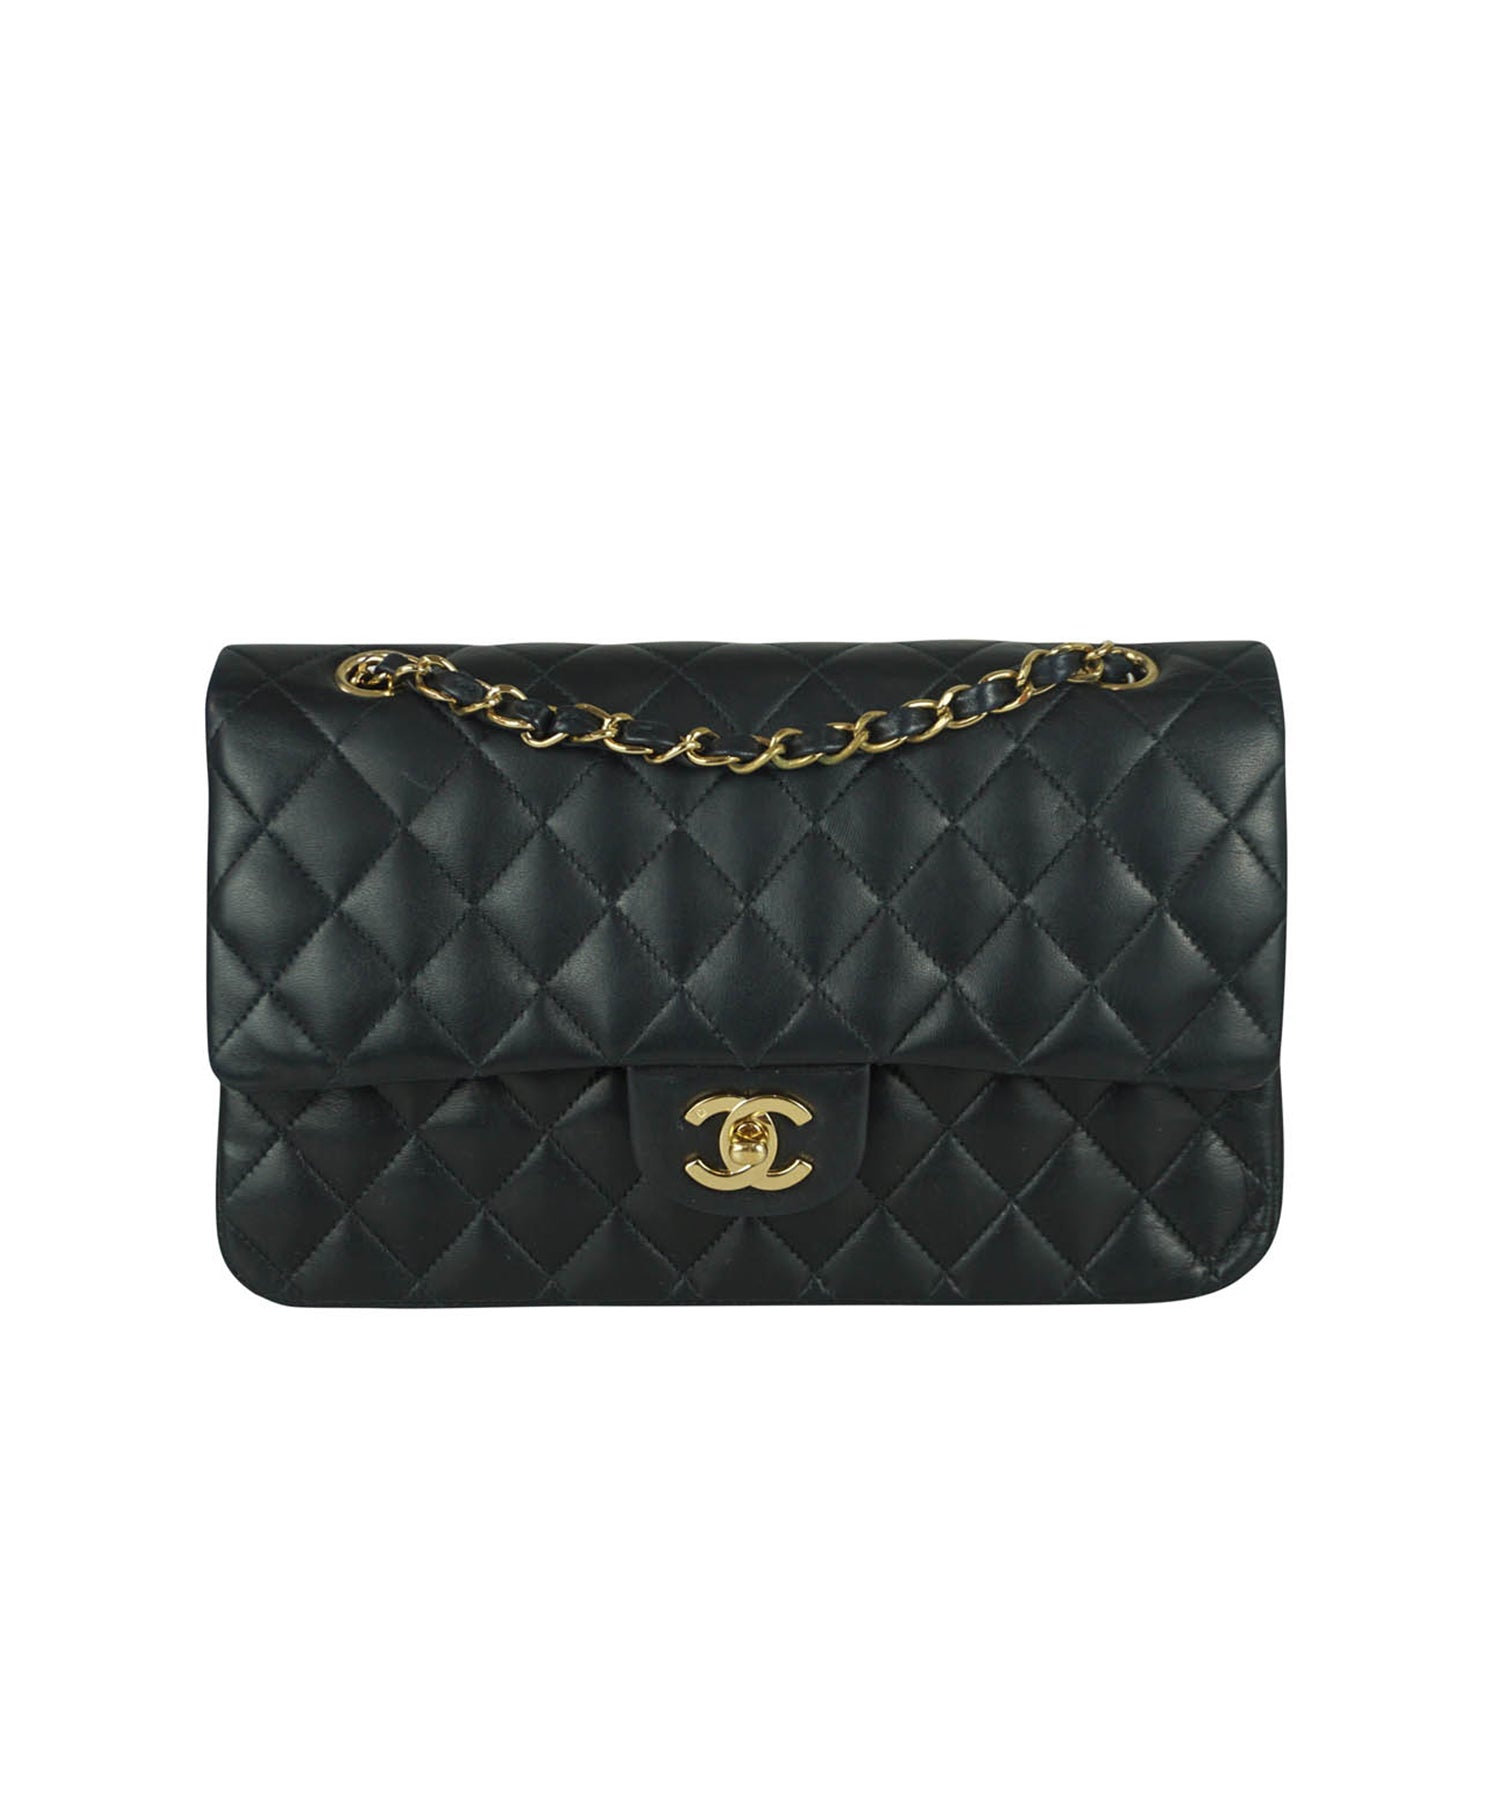 Chanel Classic Double Flap Black Napa Leather 23cm 24k GPHW Bag